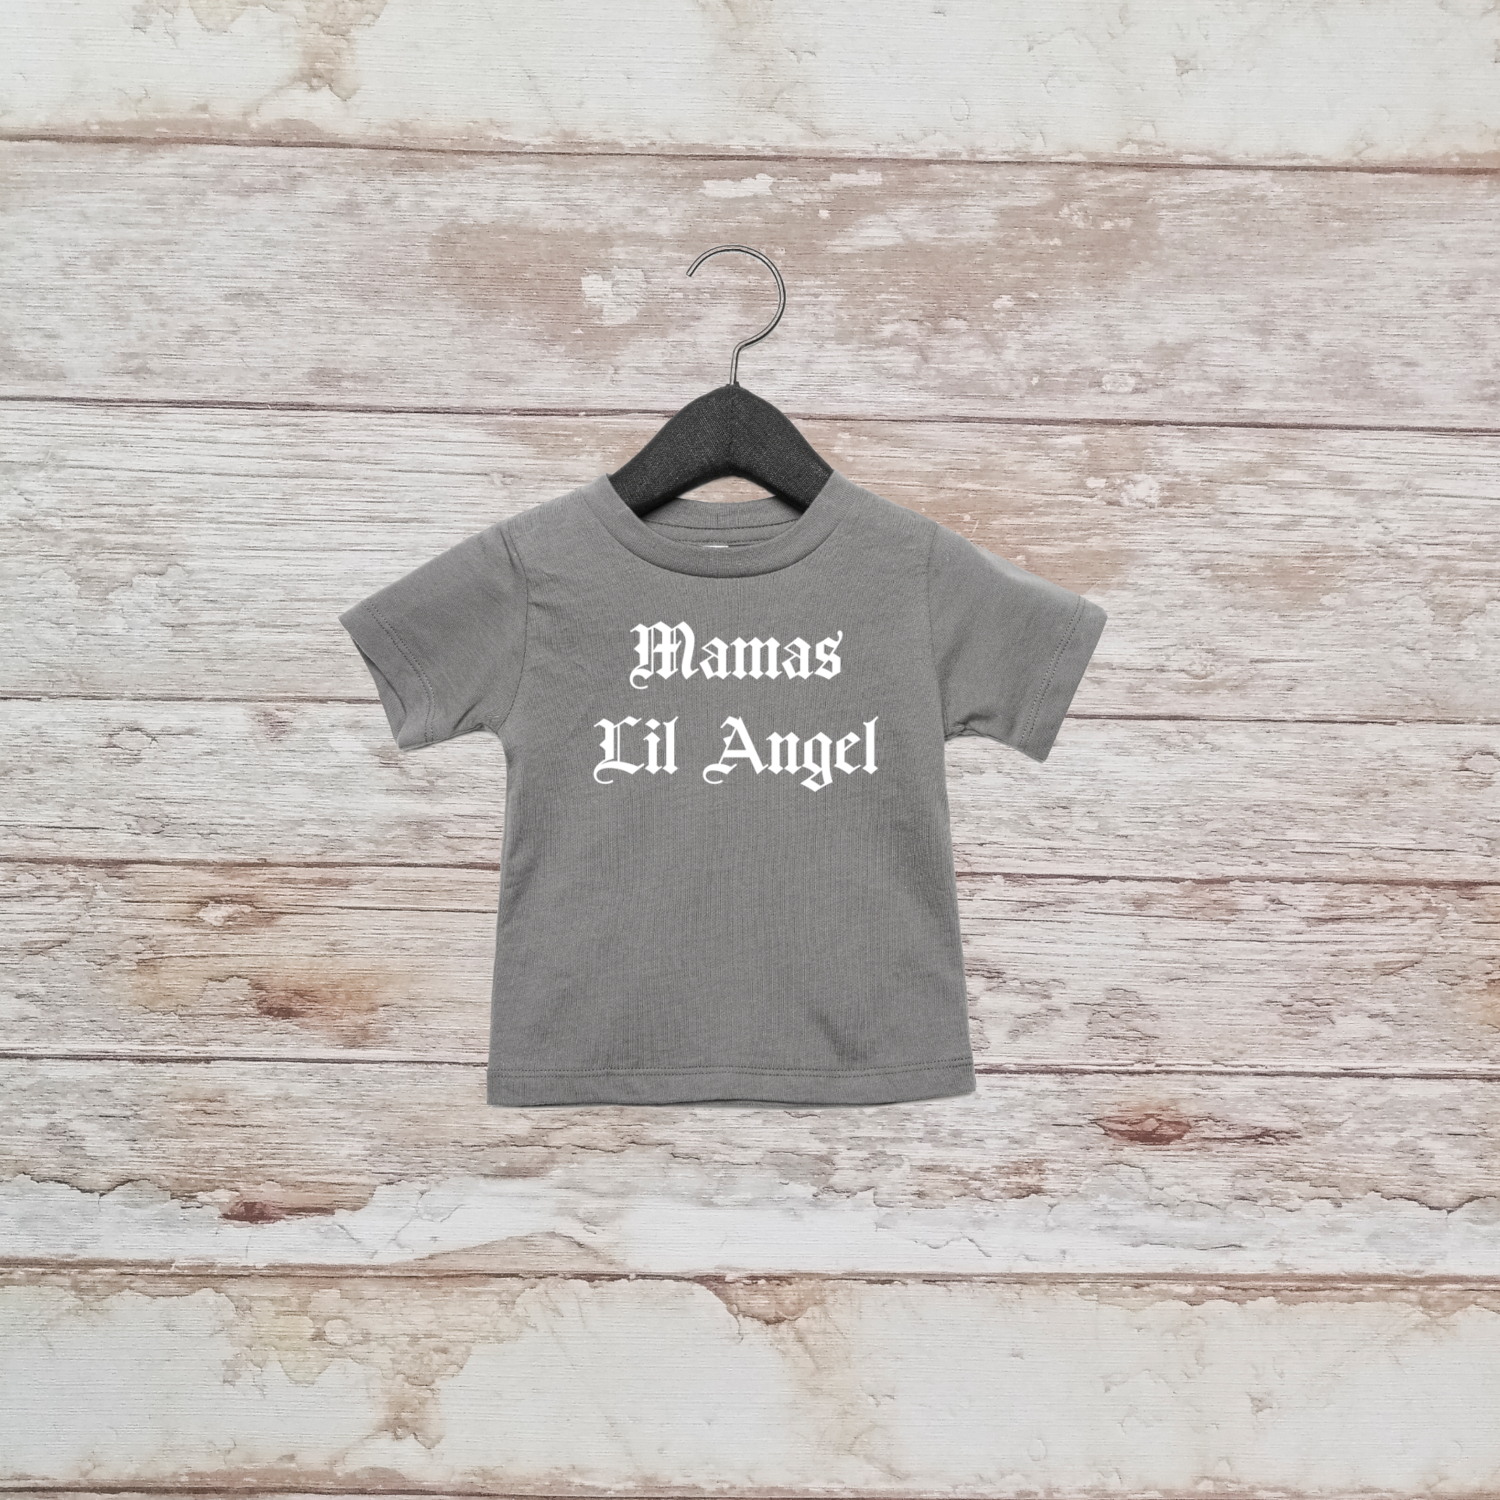 Lil Angel Toddler Shirt